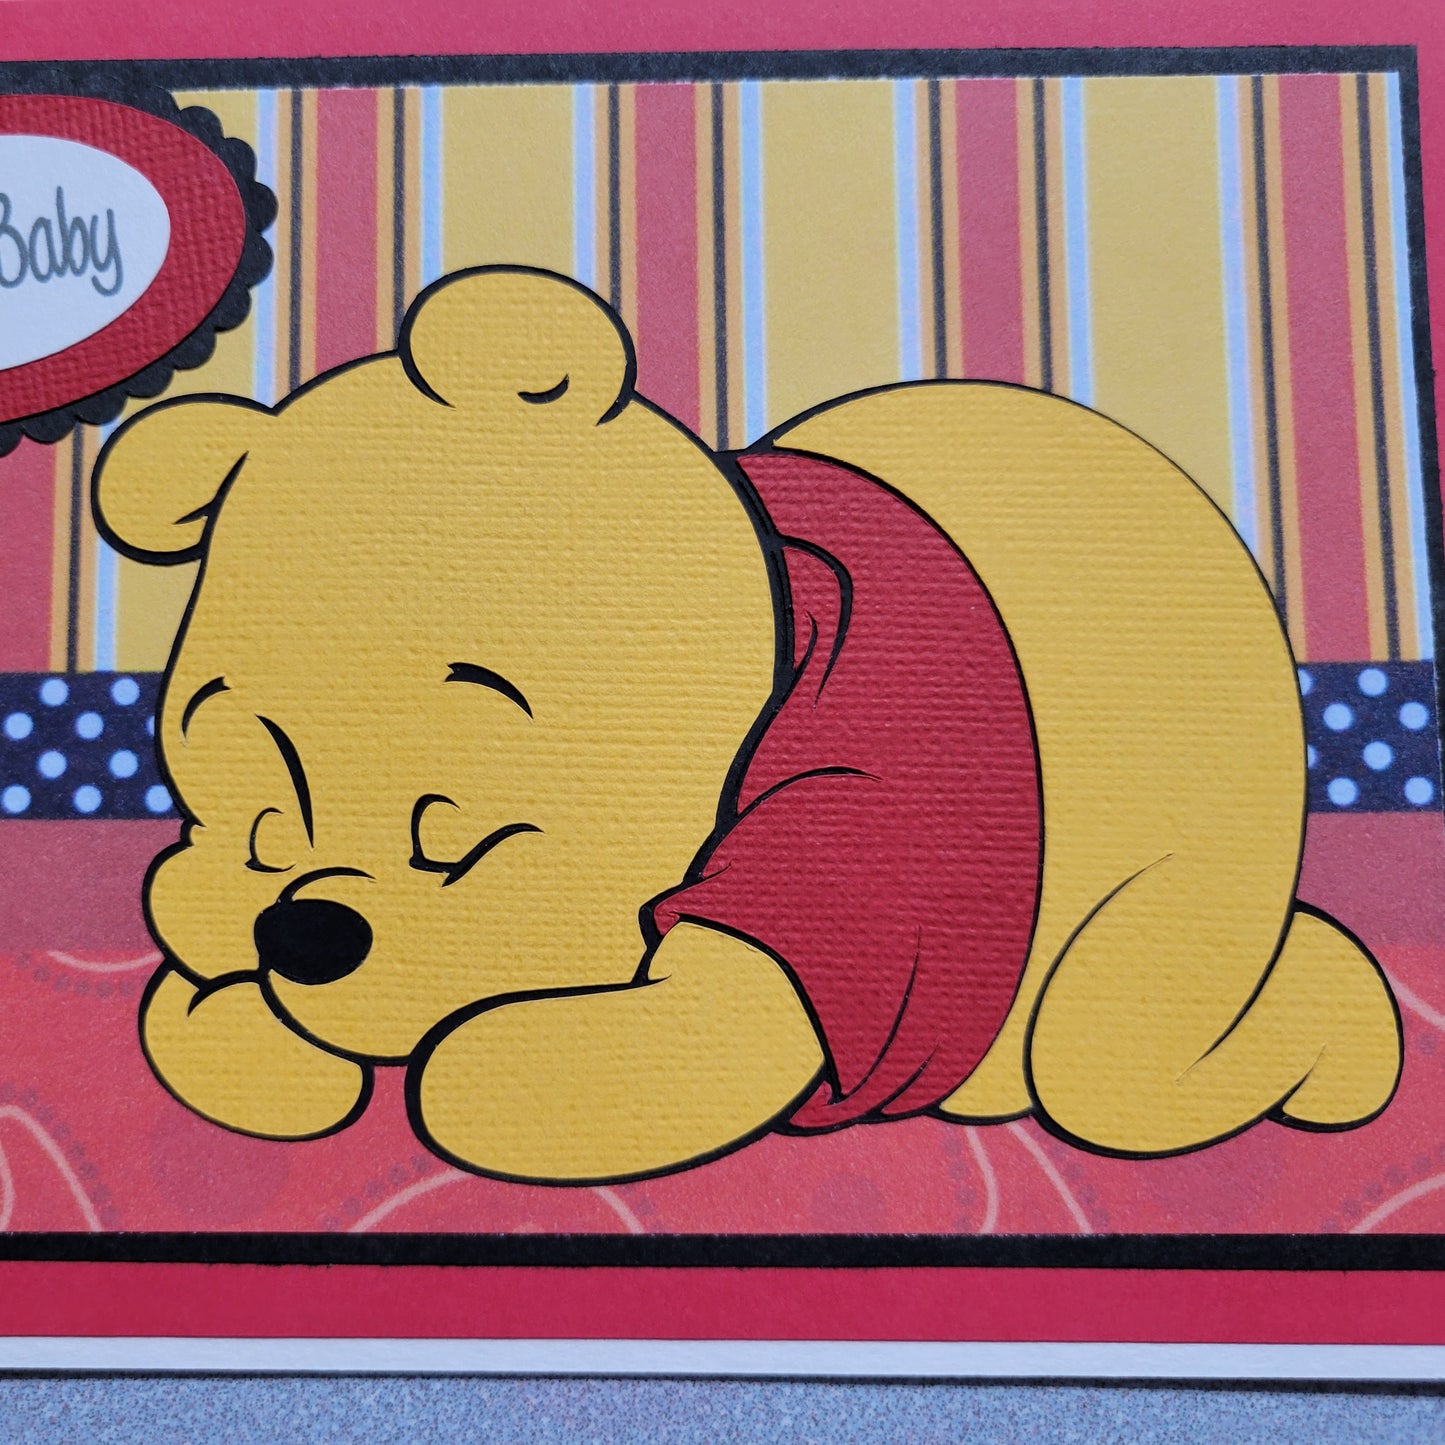 Pooh Baby Card